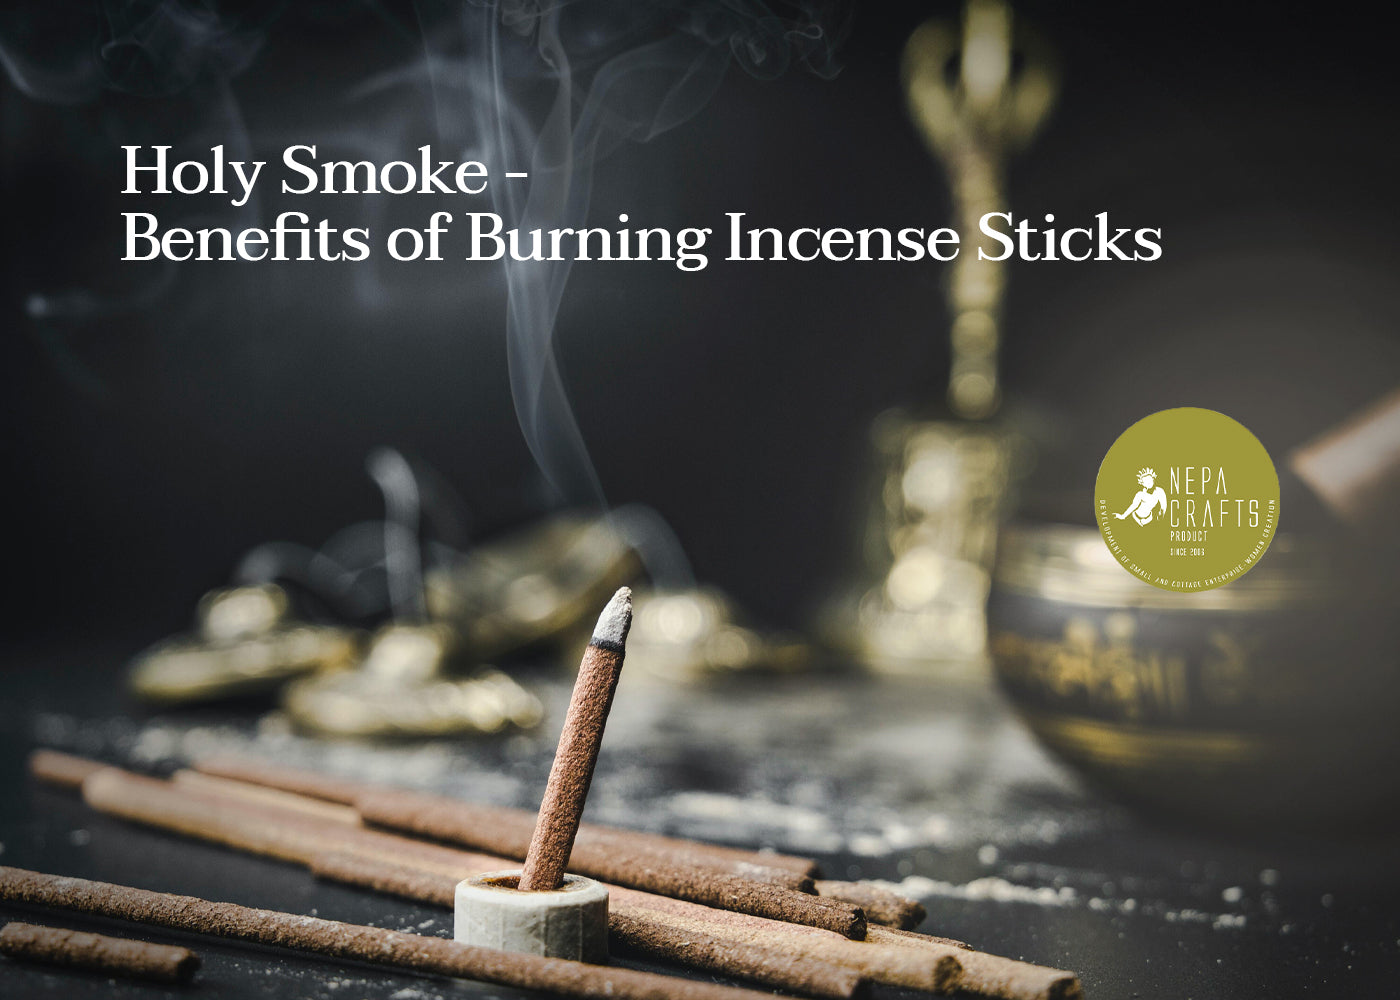 Holy Smoke - Benefits of Burning Incense Sticks